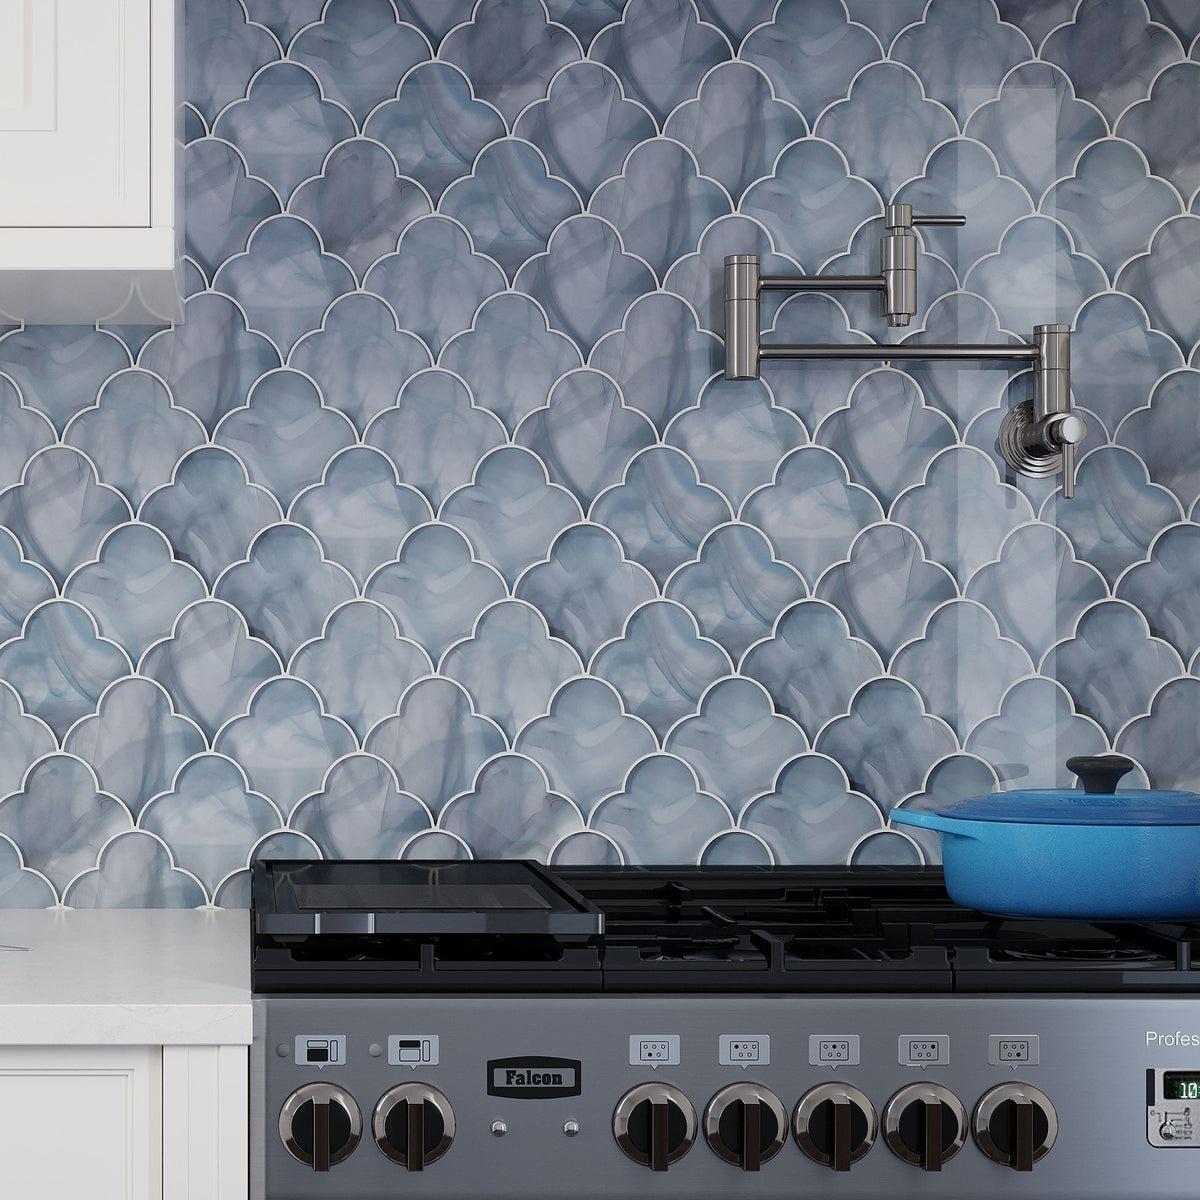 blue glass mosaic tile kitchen backsplash behind stove